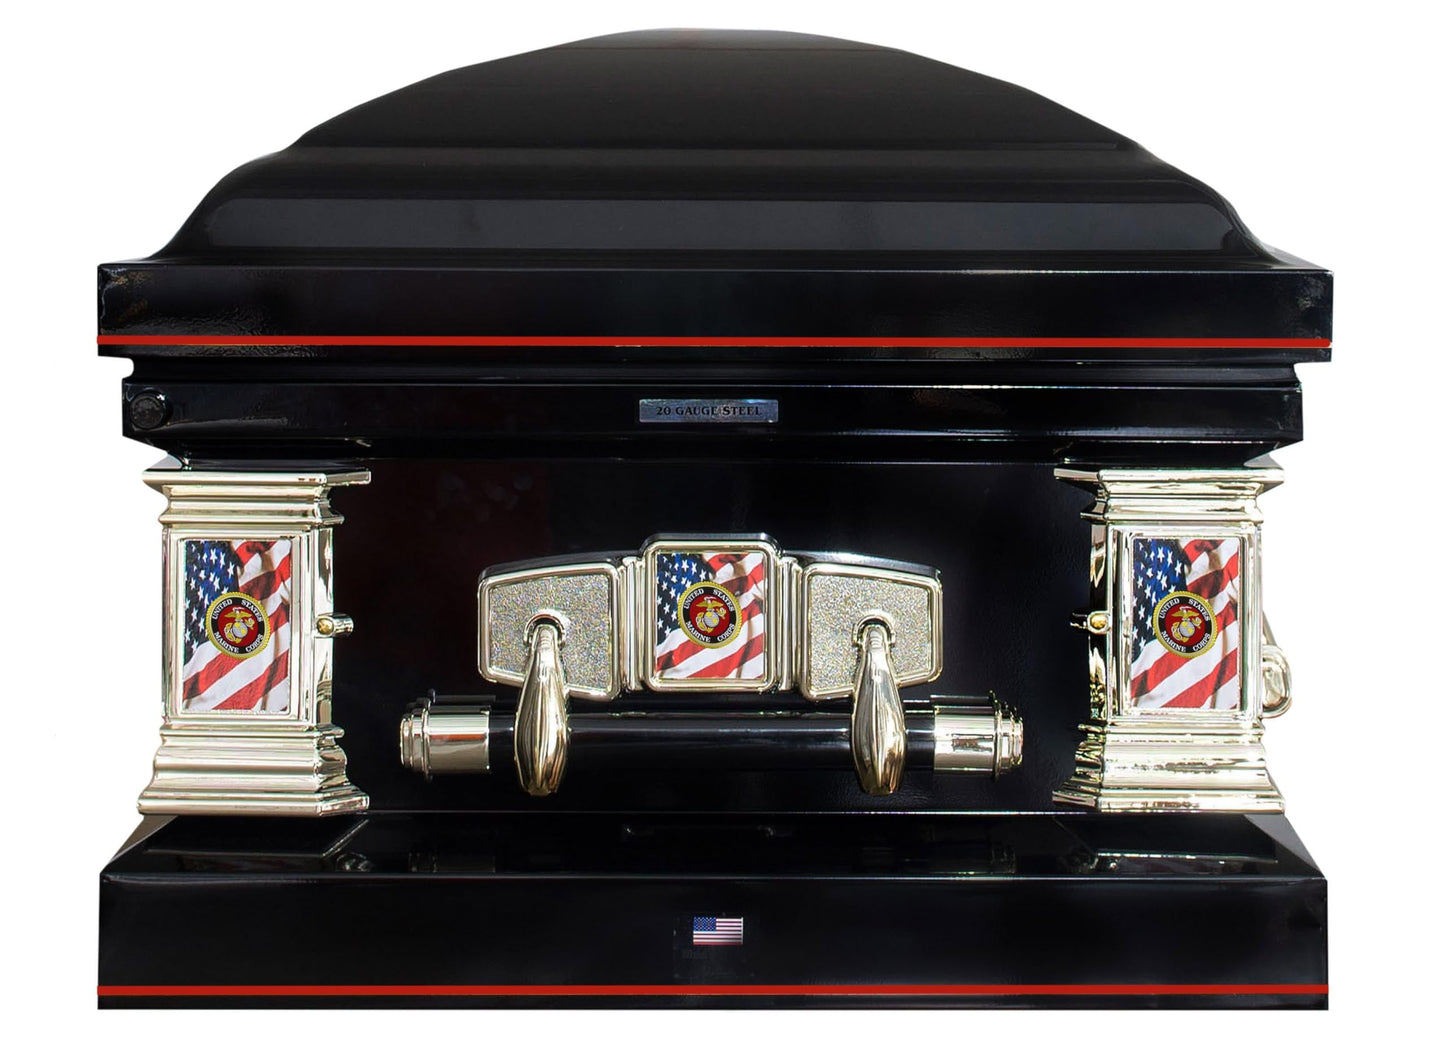 Titan Casket Veteran Select Steel Casket (Marines) Handcrafted Funeral Casket - Black with Black, Red-Lined Interior & Marines Head Panel